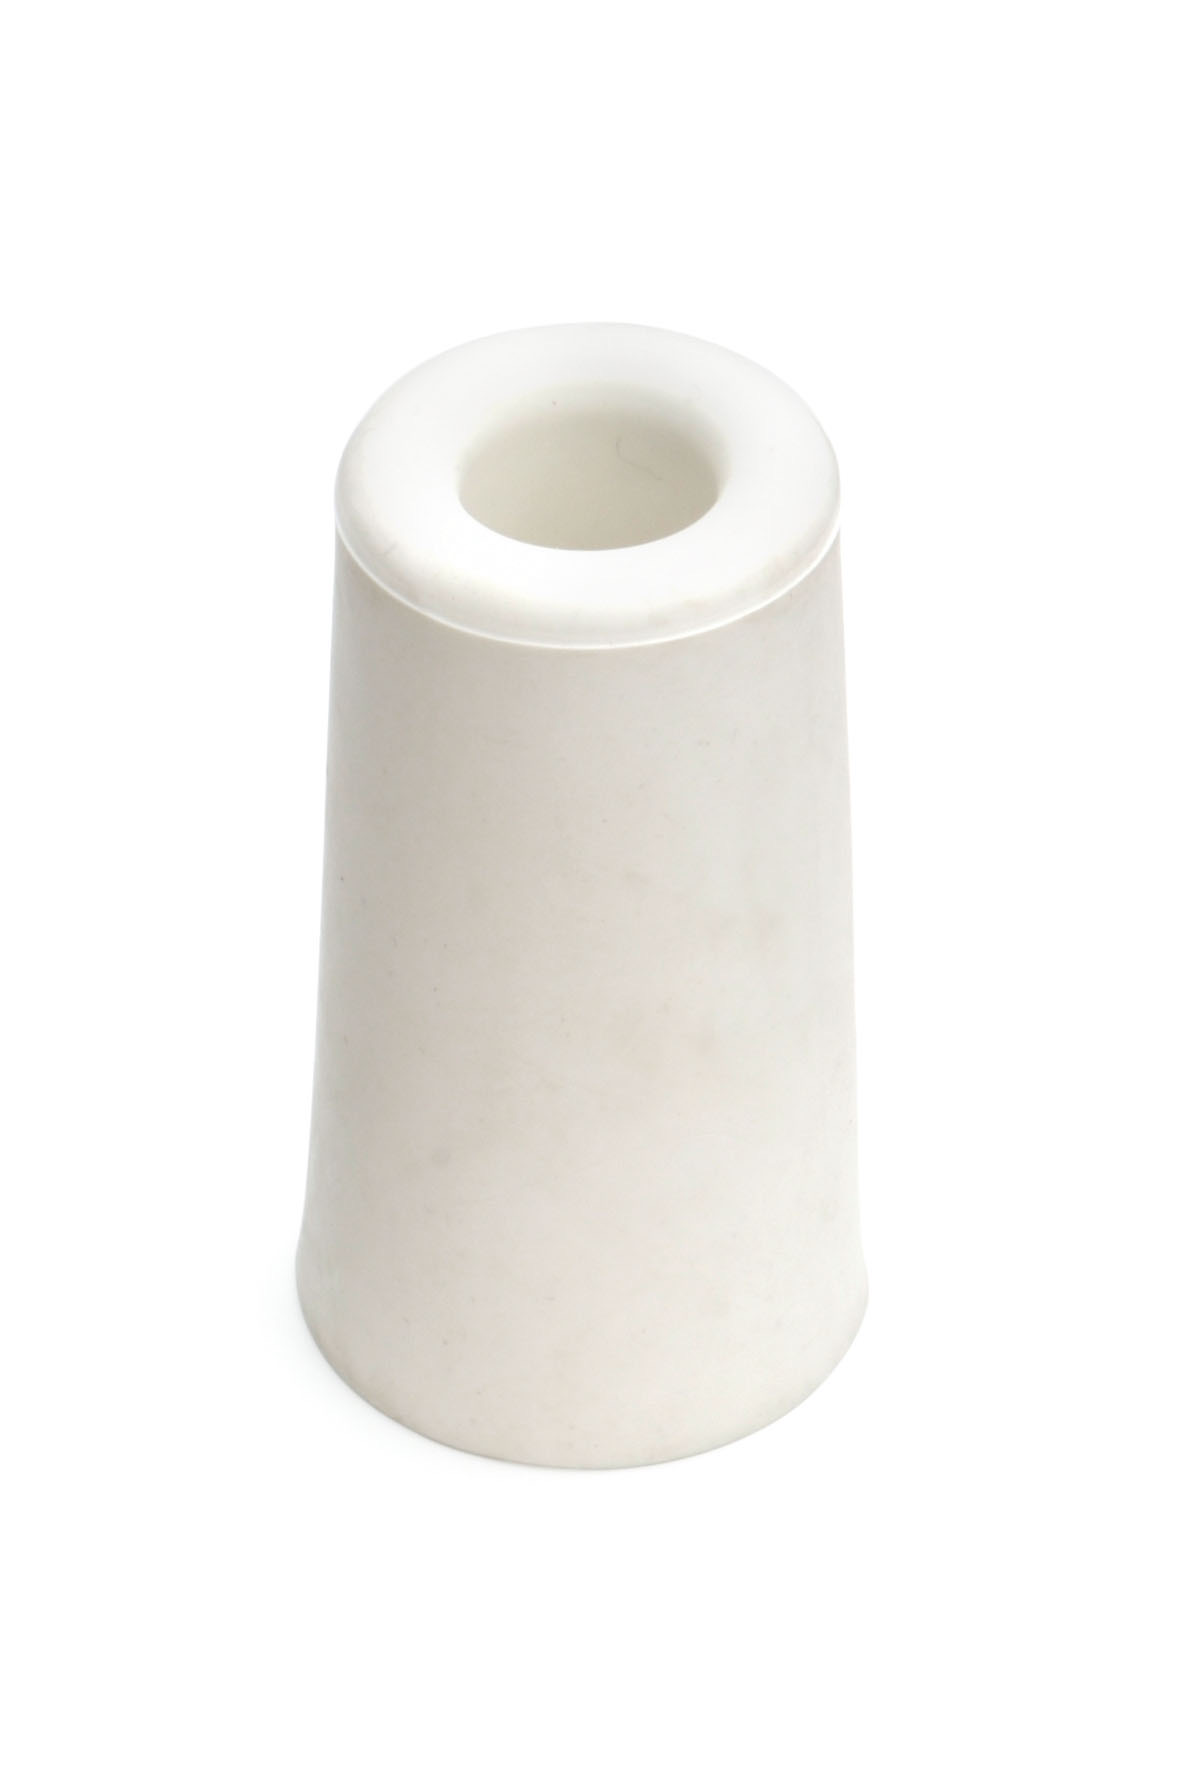 Deurstopper rubber wit 30x24 mm.jpg